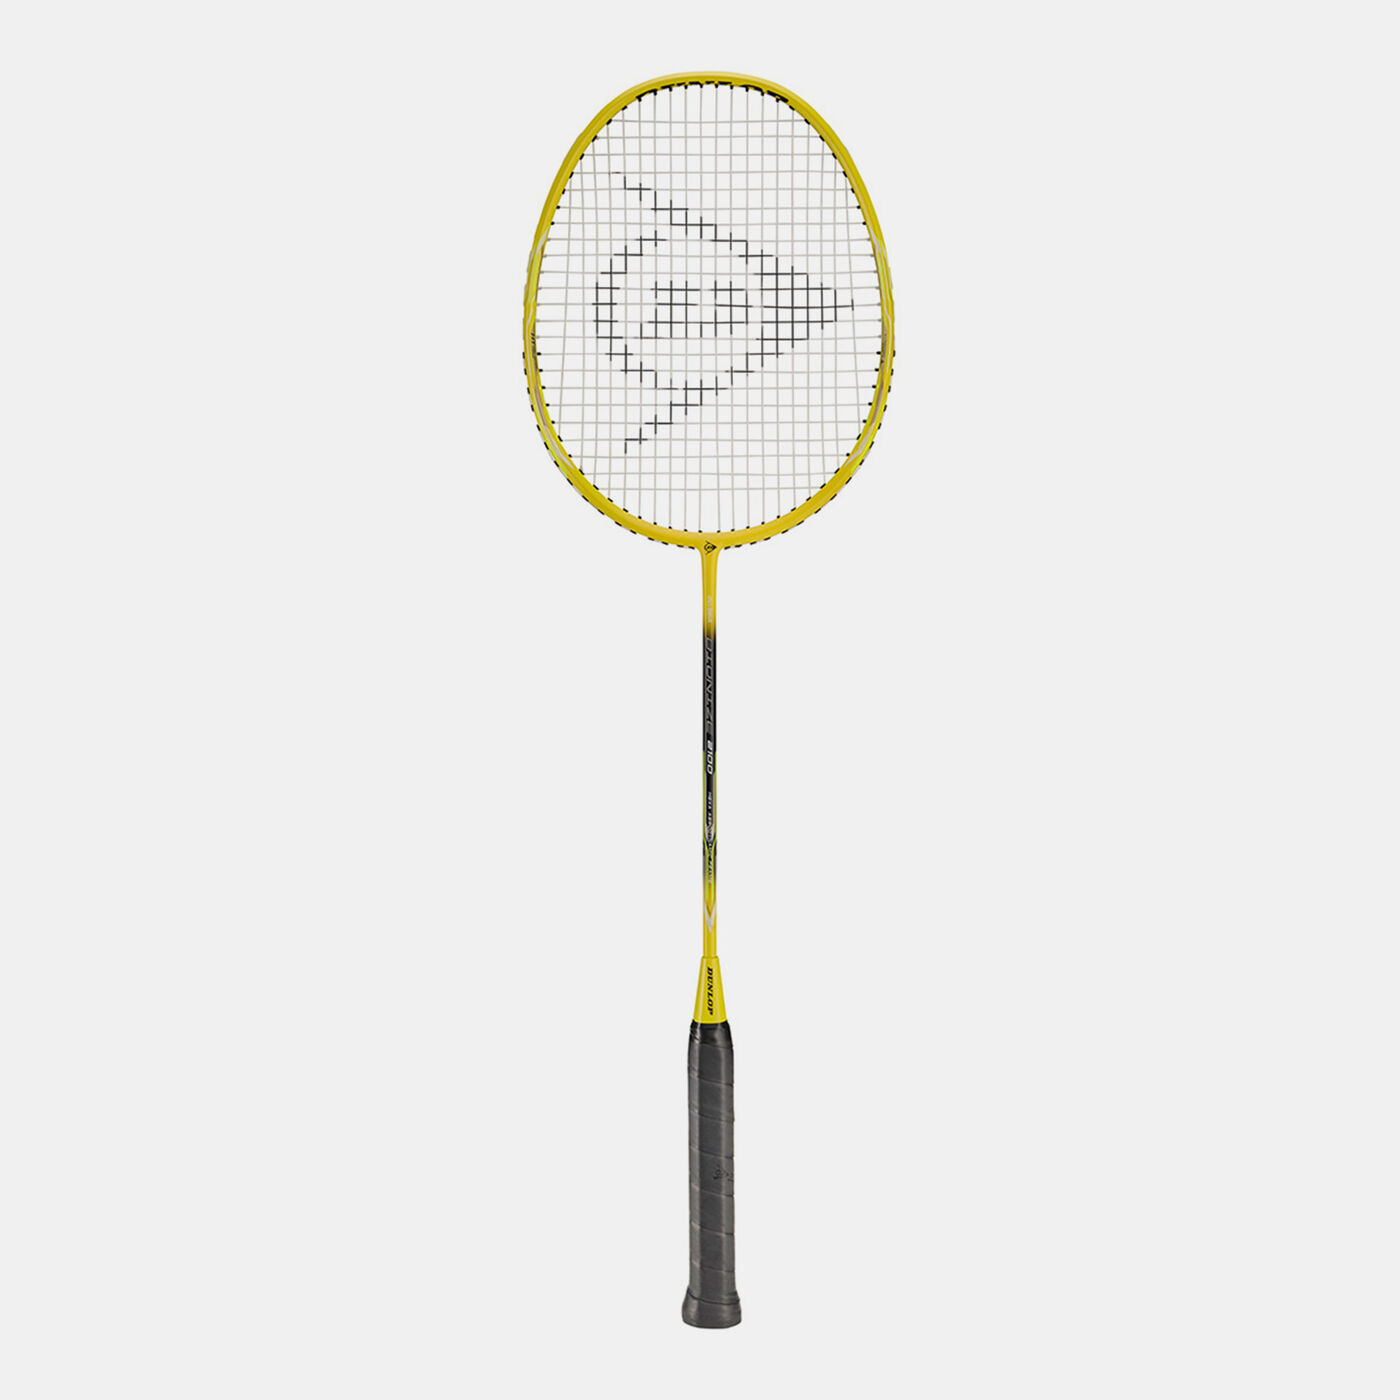 Bionize 2100 G6 Badminton Racket